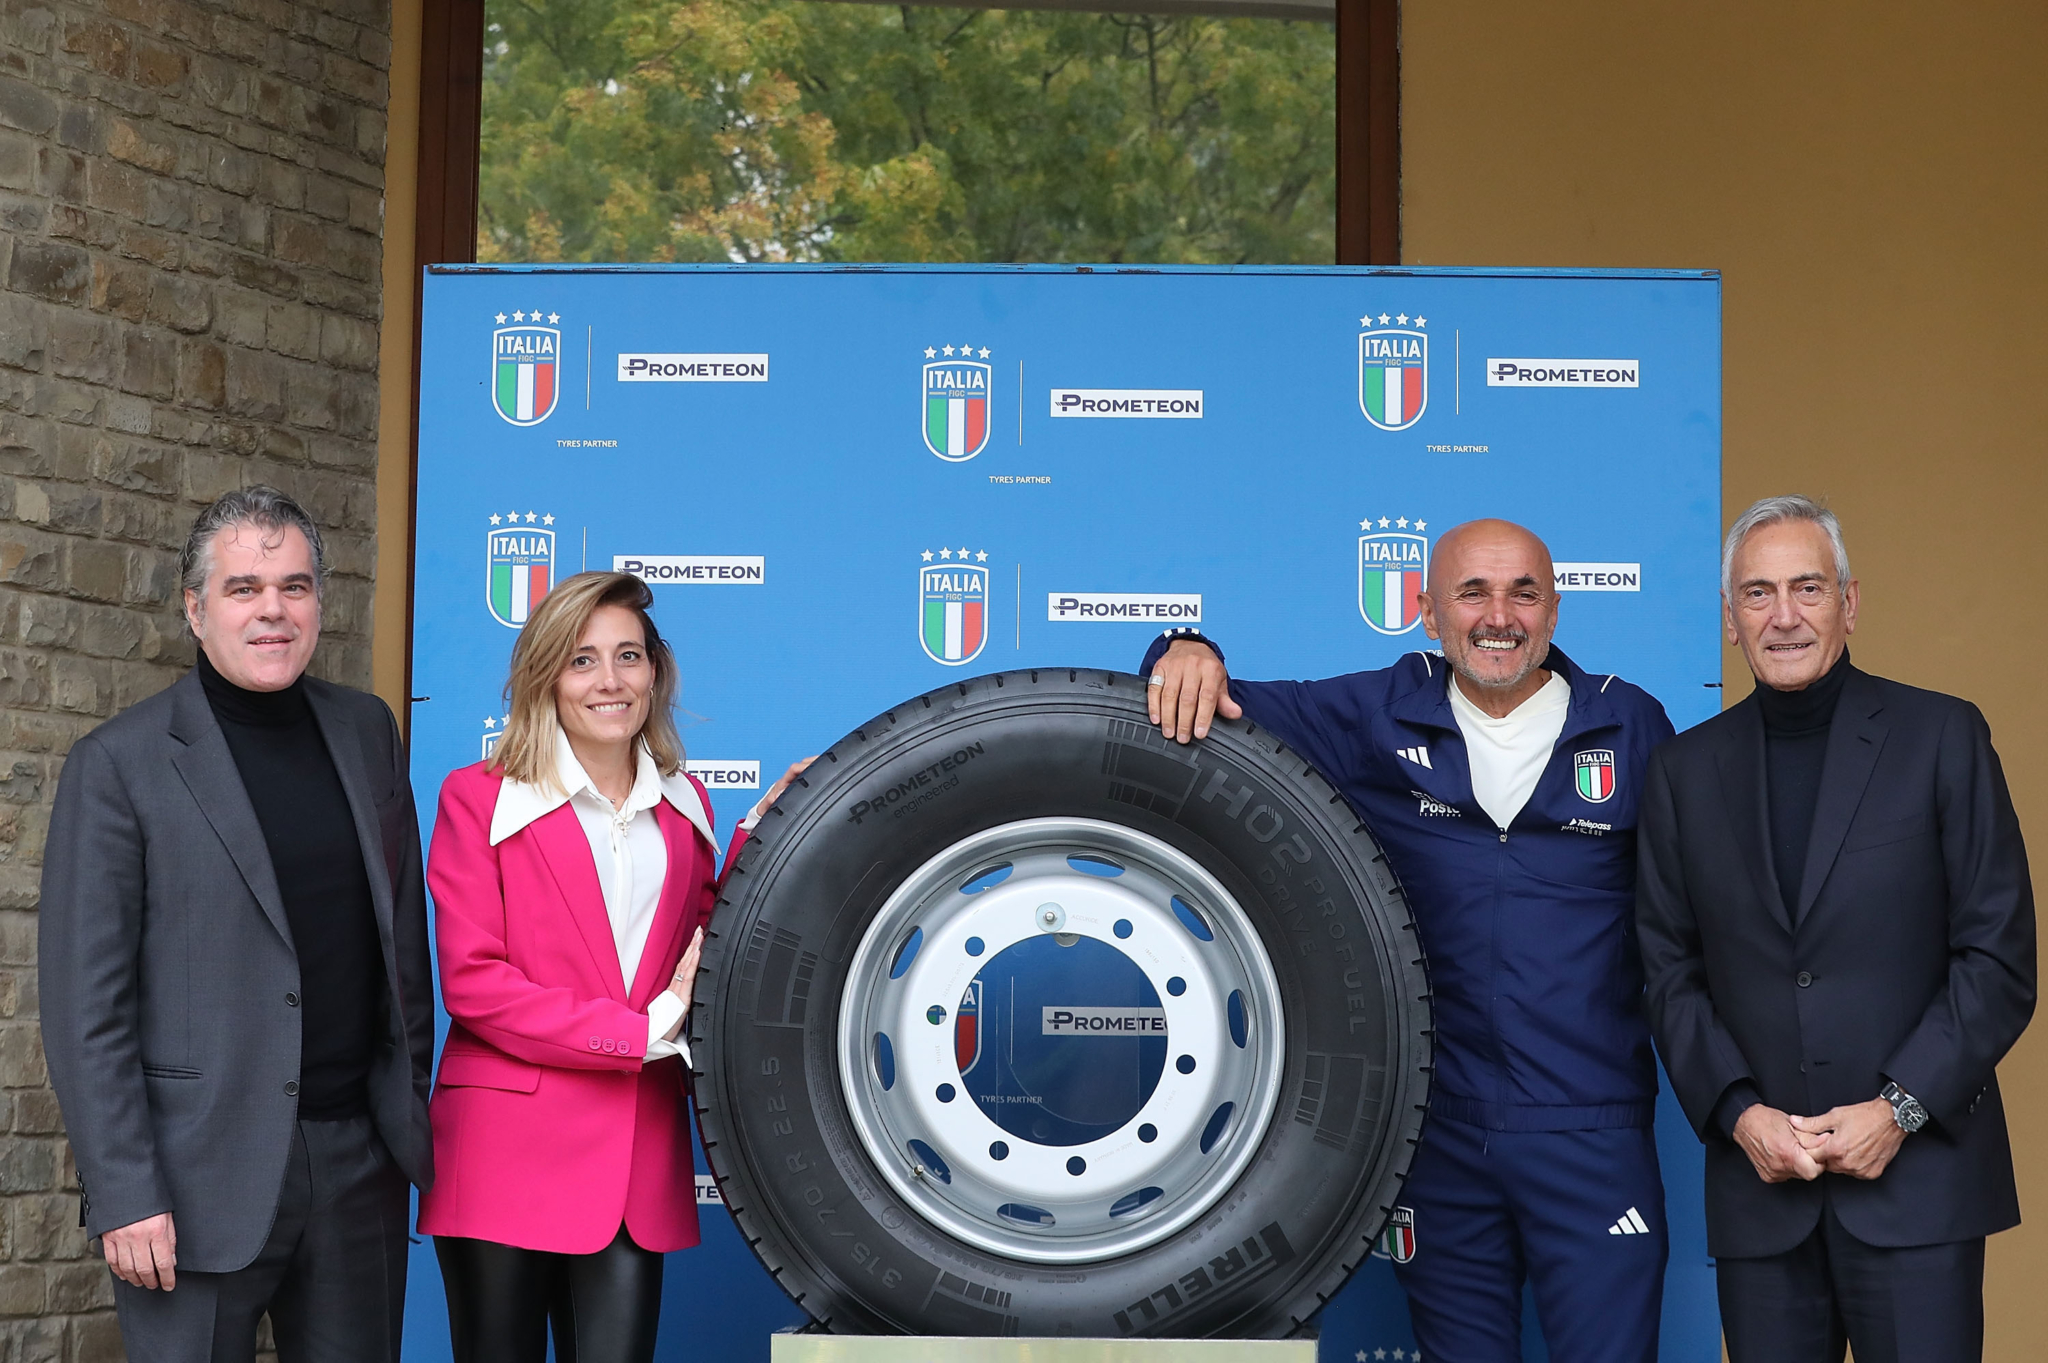 Prometeon sponsors Italy’s national football teams